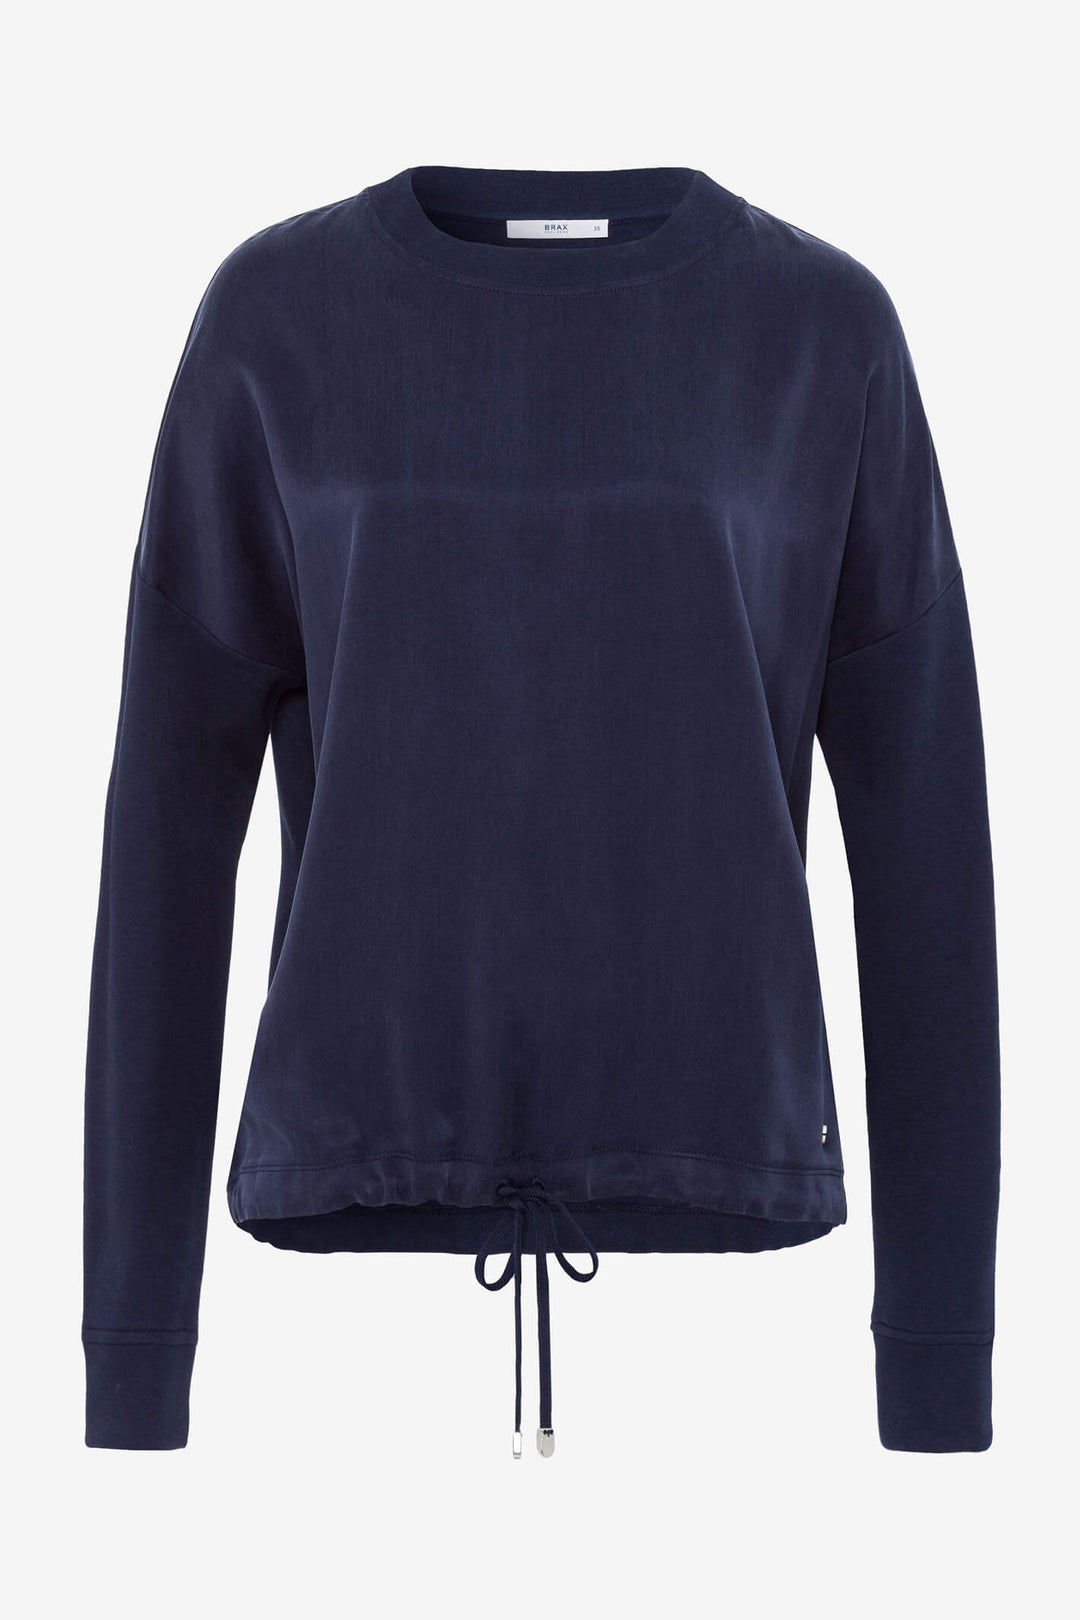 Brax Bo 35-6824 20 Marine Blue Sweatshirt - Shirley Allum Boutique